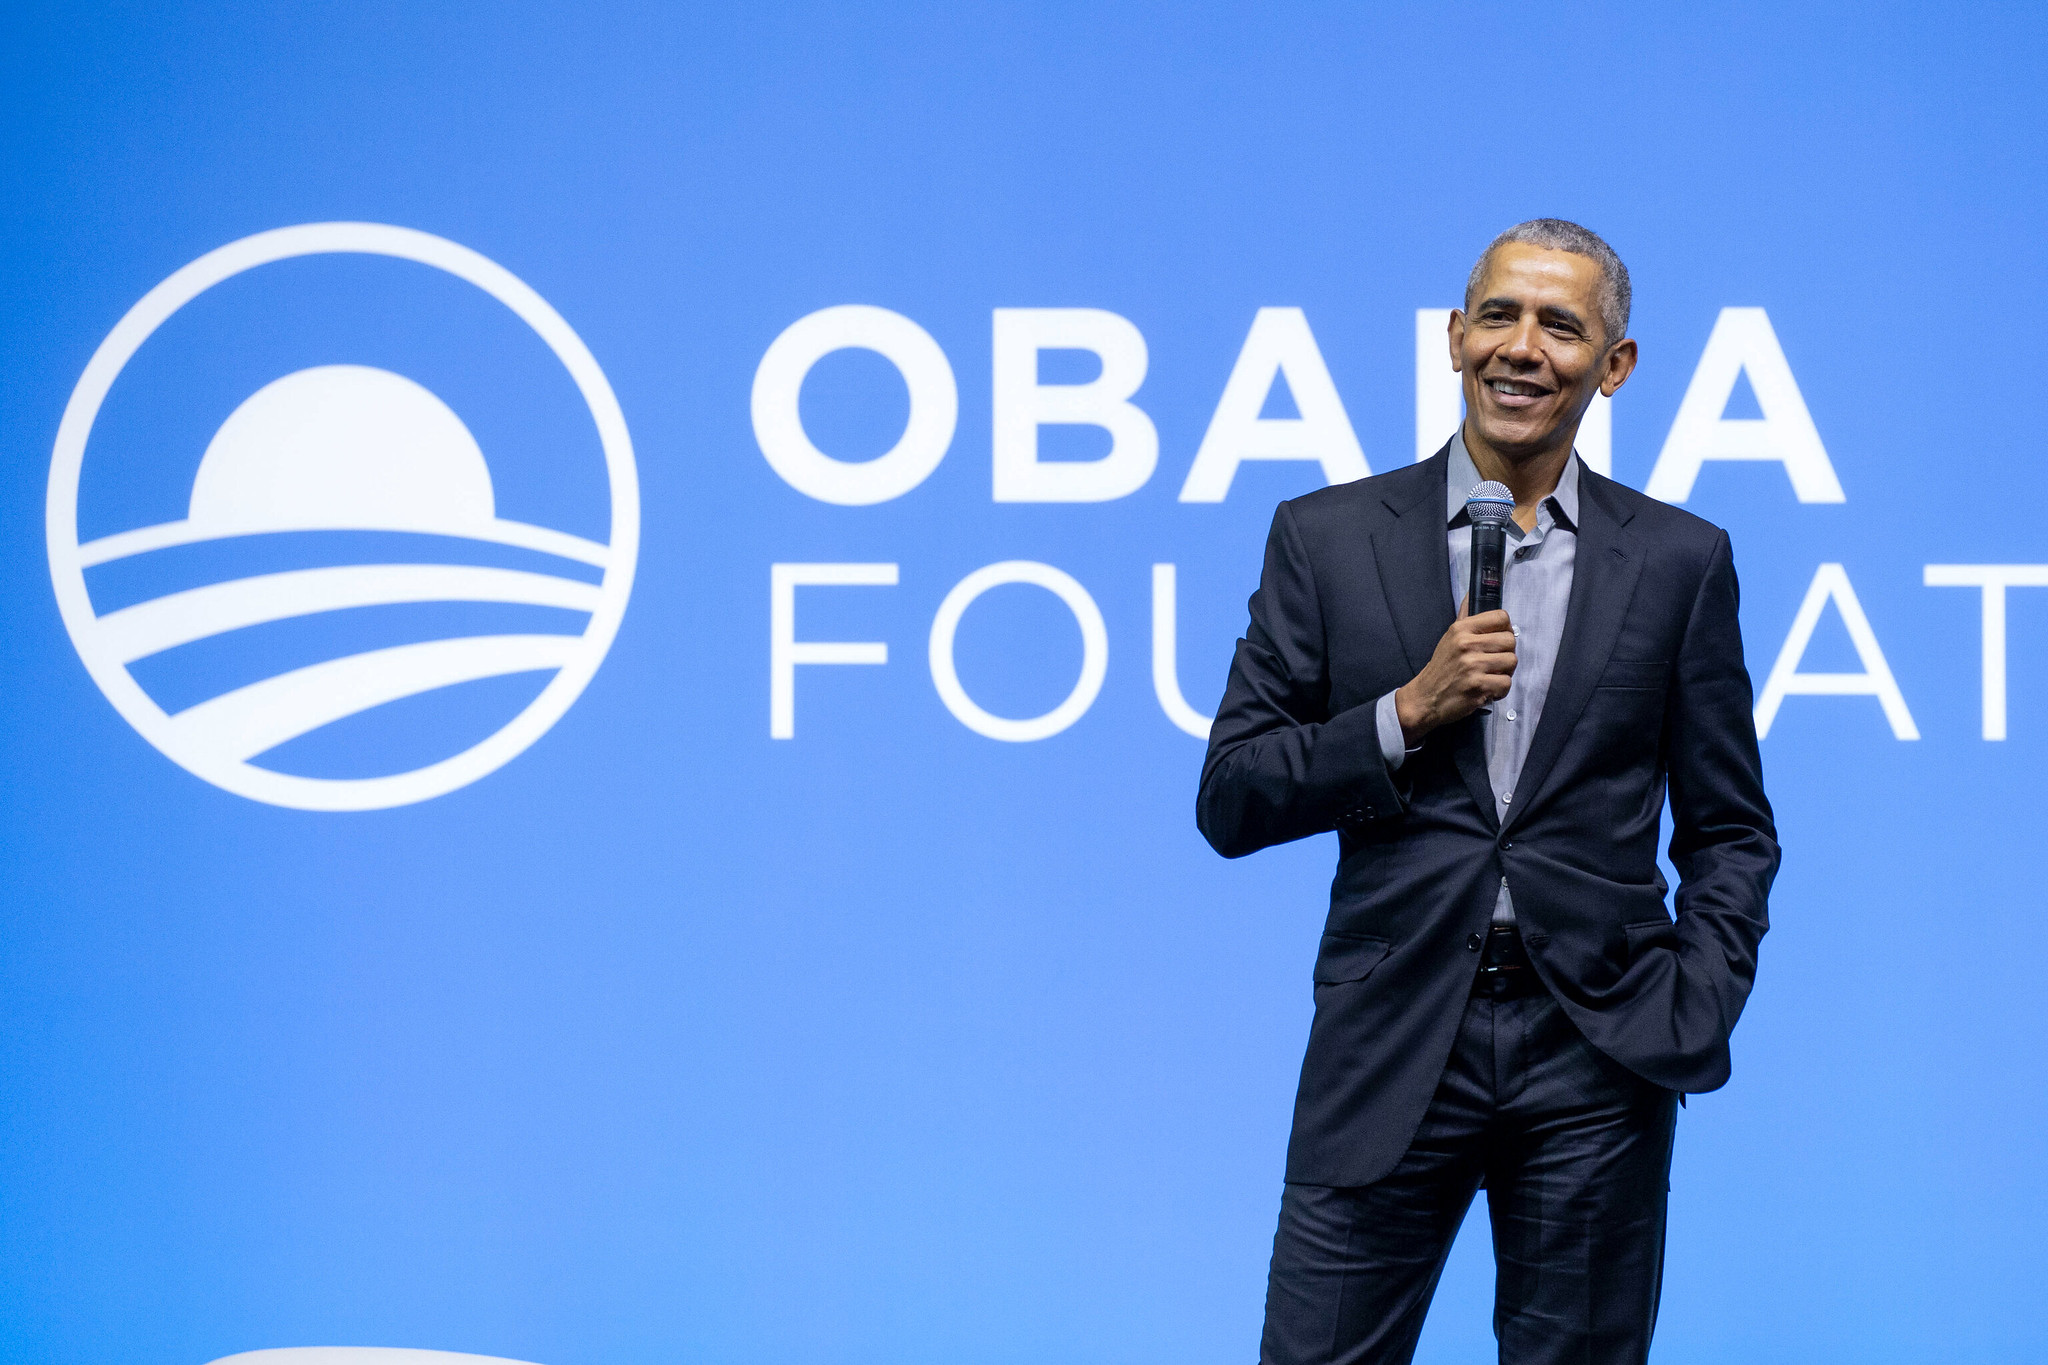 Obama Foundation Leaders Asia-Pacific Program 2022